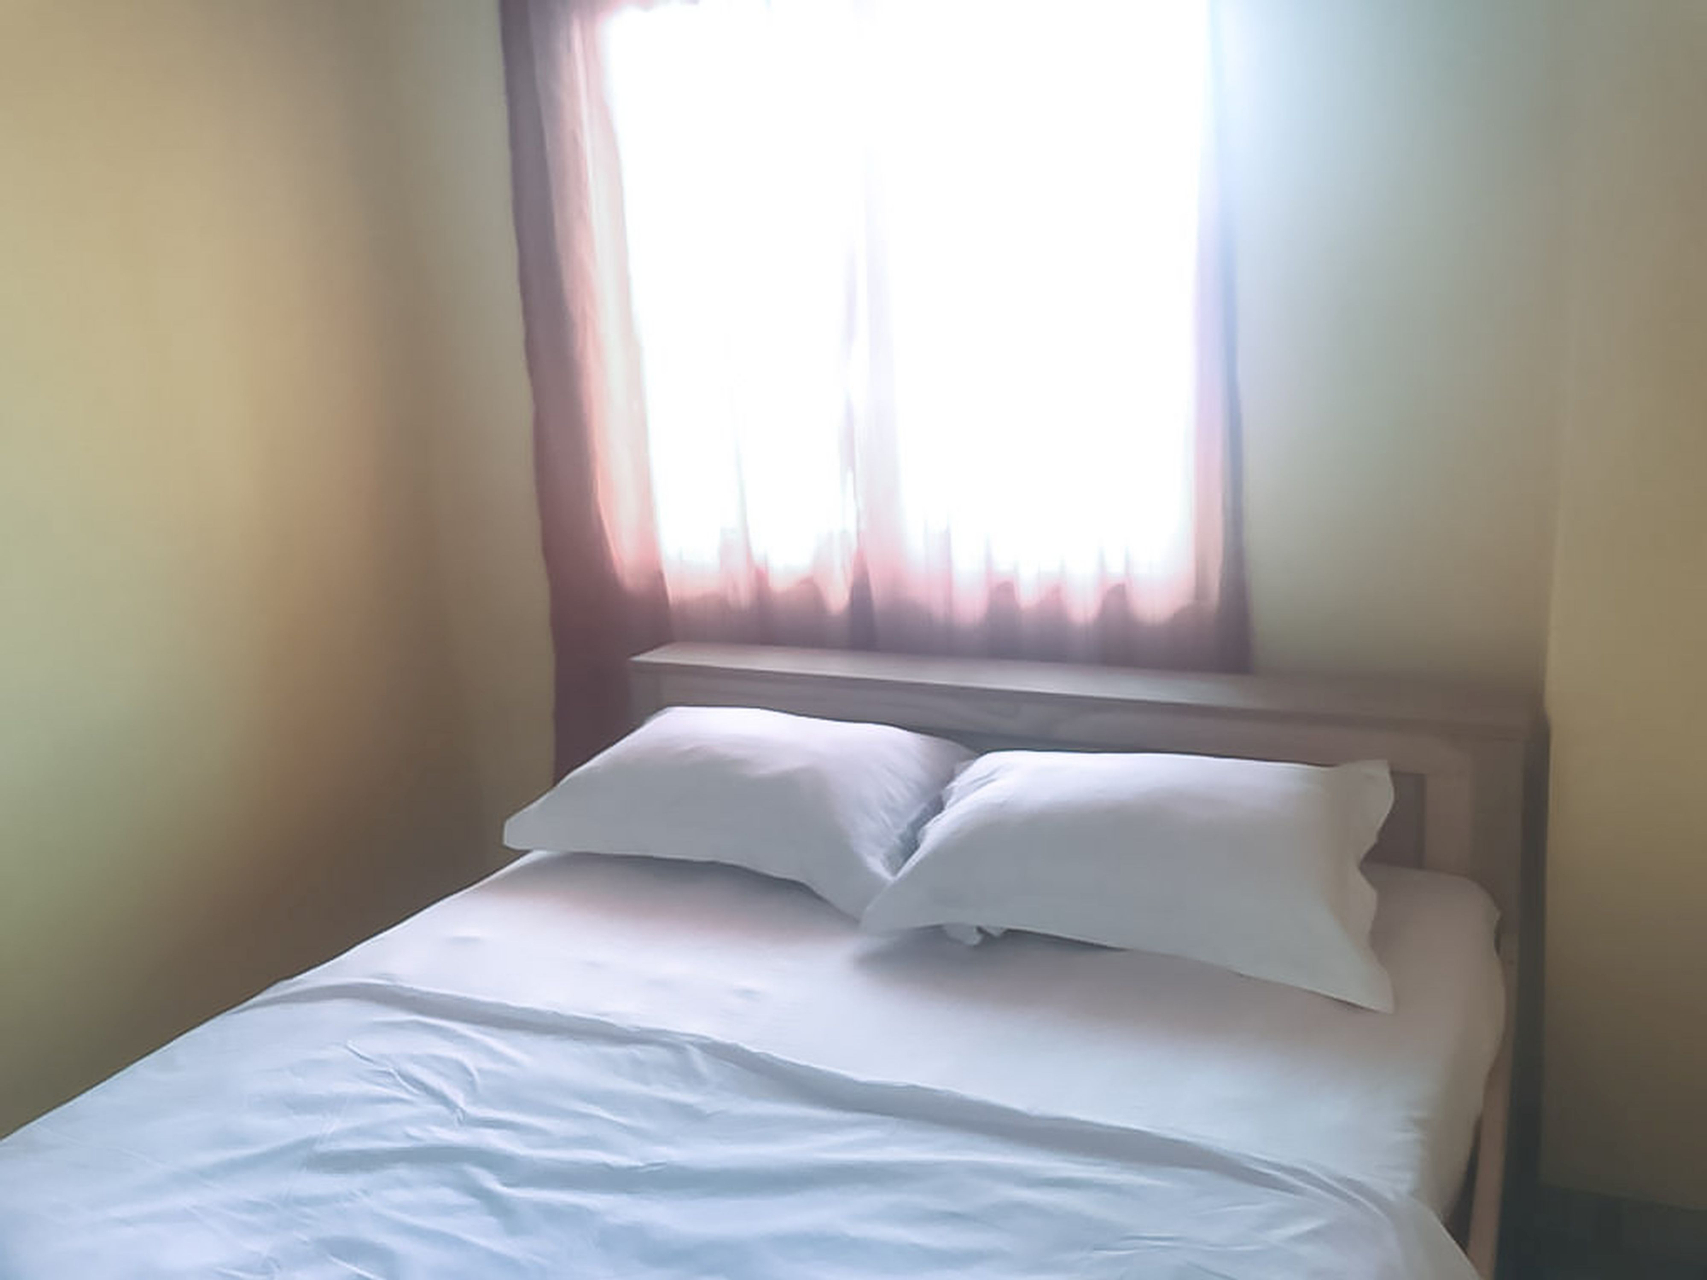 Bedroom 3, Oasis Samosir near Wisata Batu Kursi Raja Siallagan RedPartner, Samosir